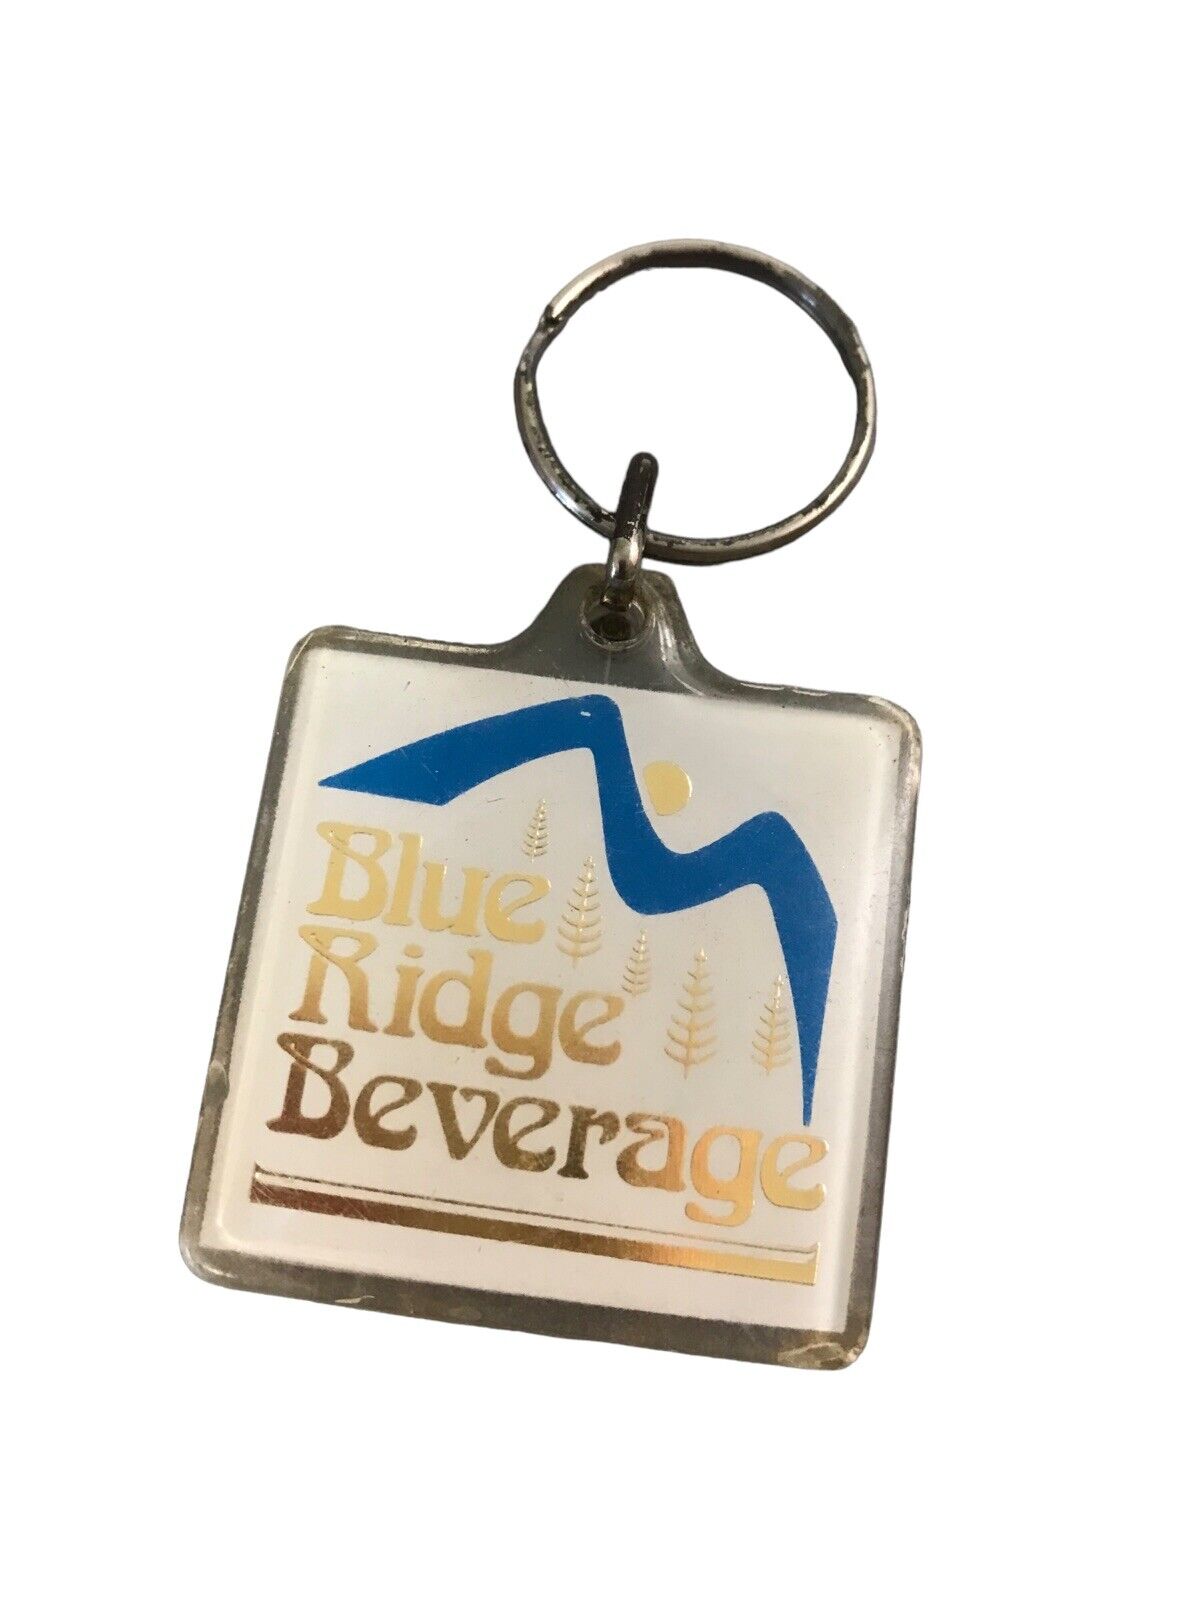 Vintage Blue Ridge Beverage Advertising Keychain Key Fob Key Ring